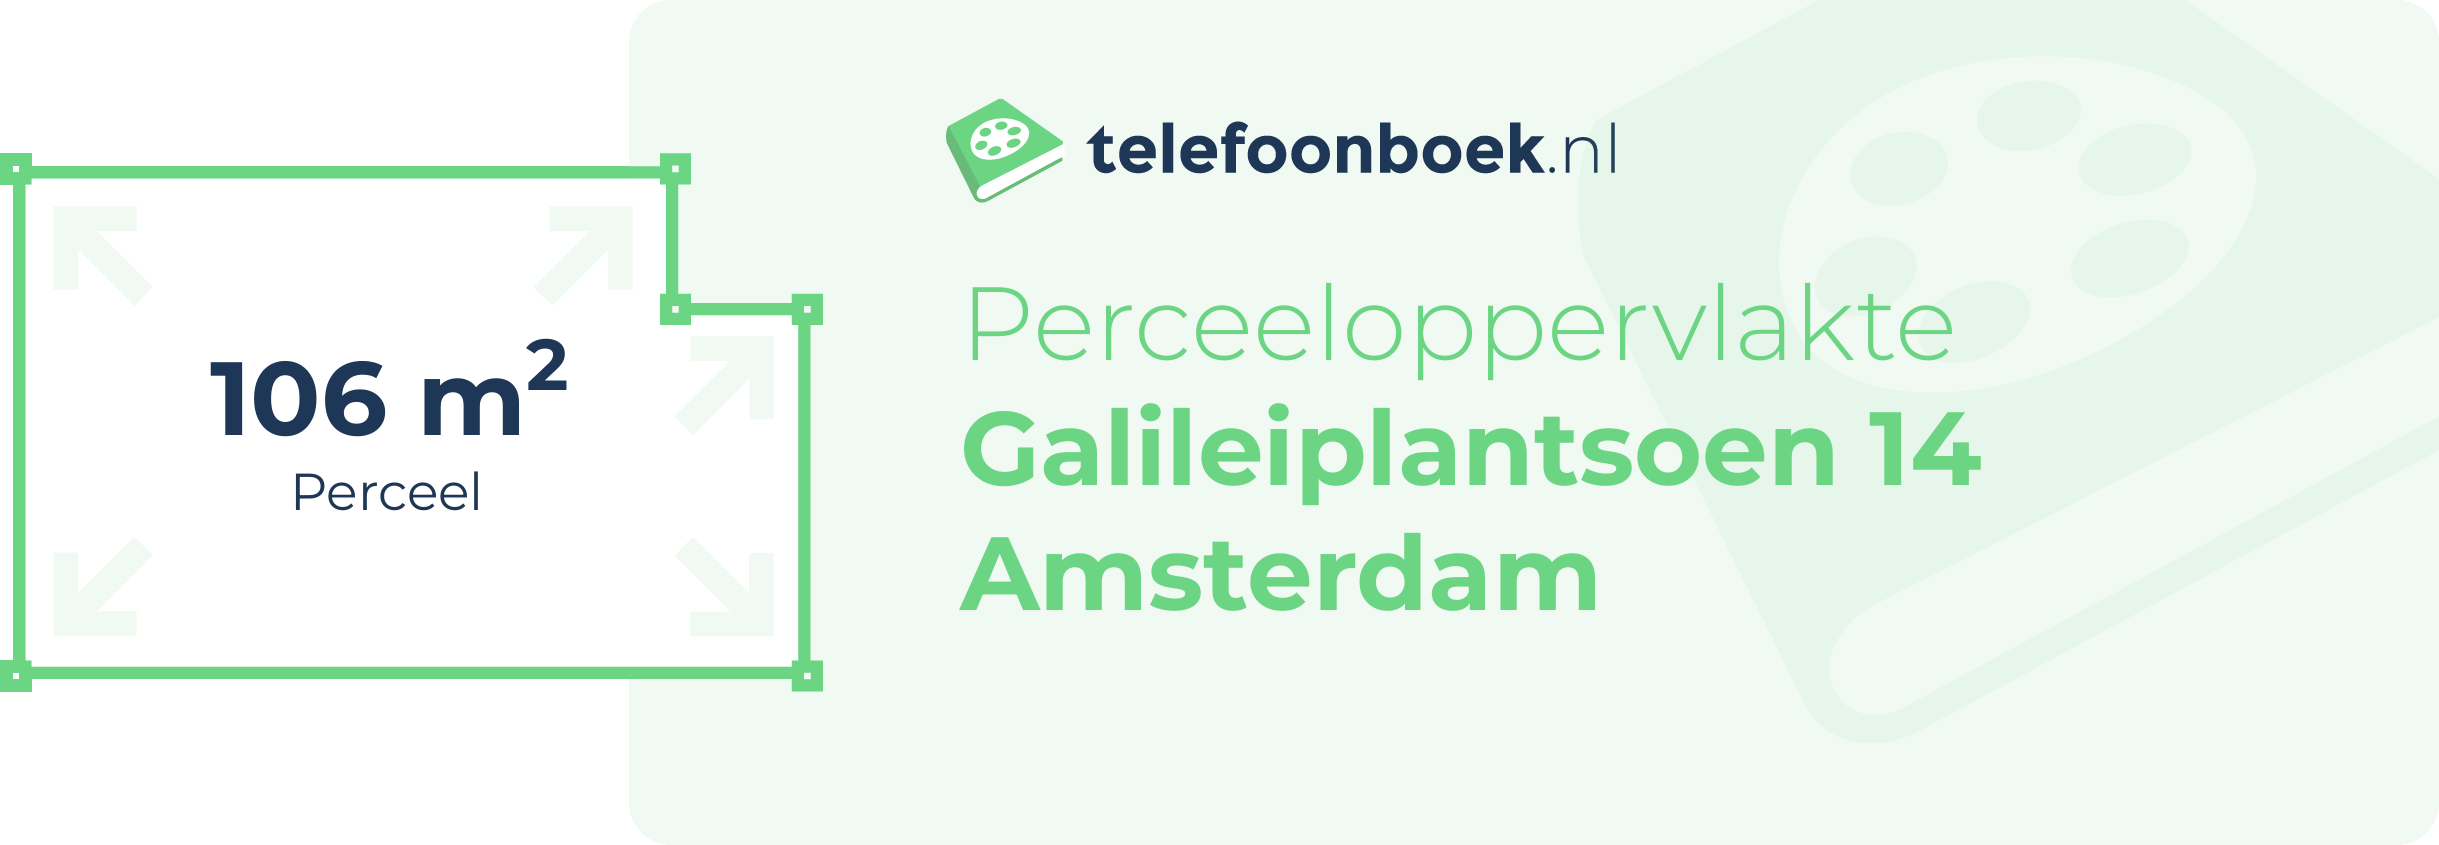 Perceeloppervlakte Galileiplantsoen 14 Amsterdam